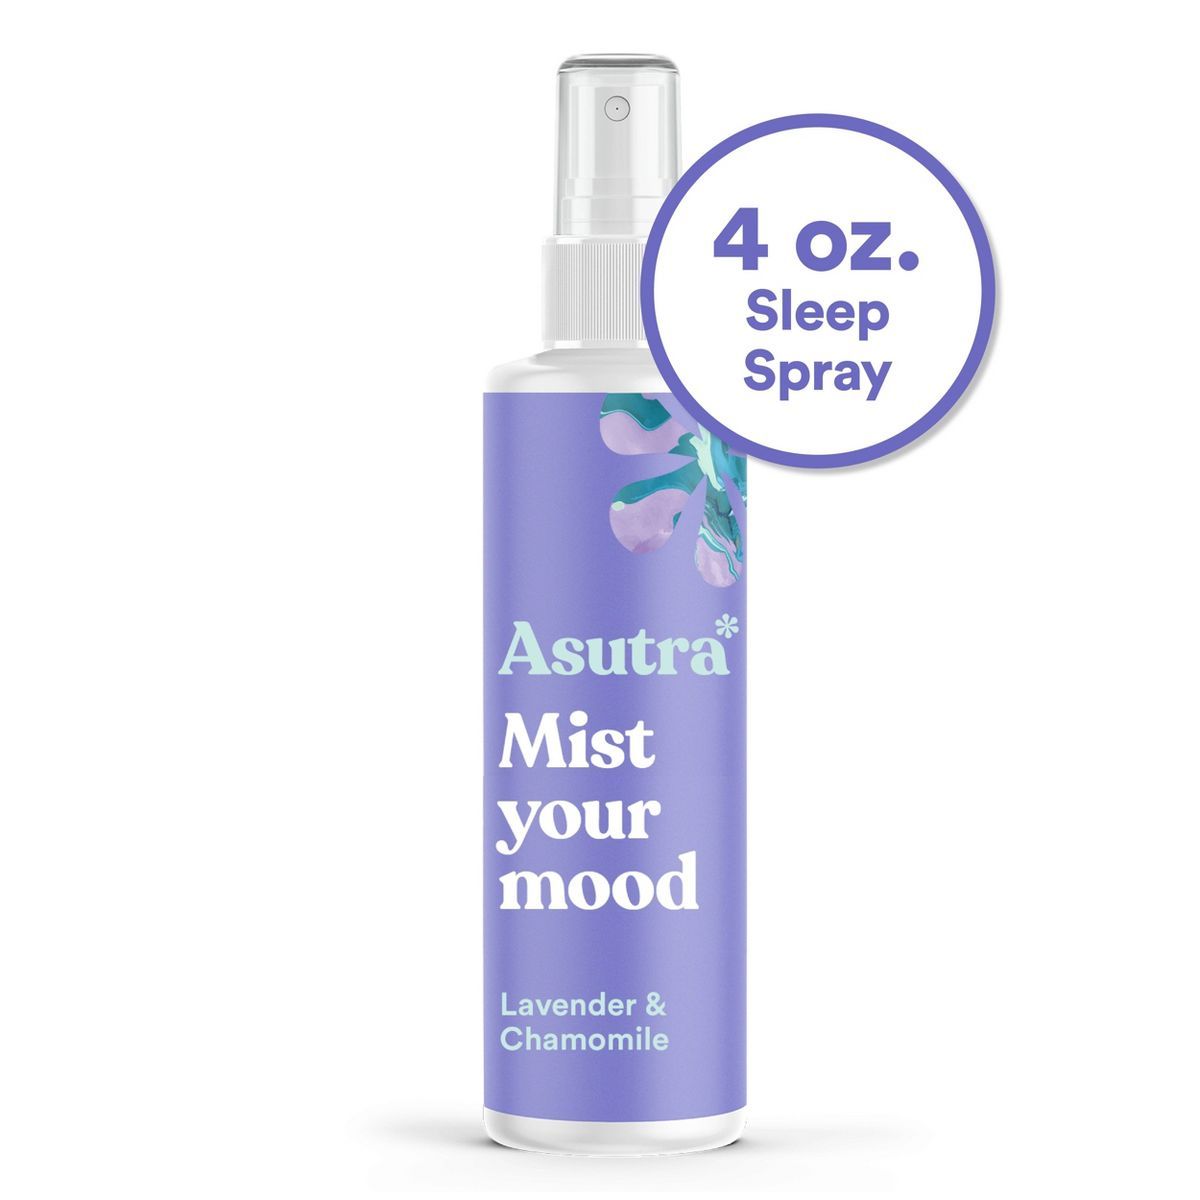 Asutra Mist Your Mood Sleep & Room Spray with Lavender & Chamomile Essential Oils - 4 fl oz | Target